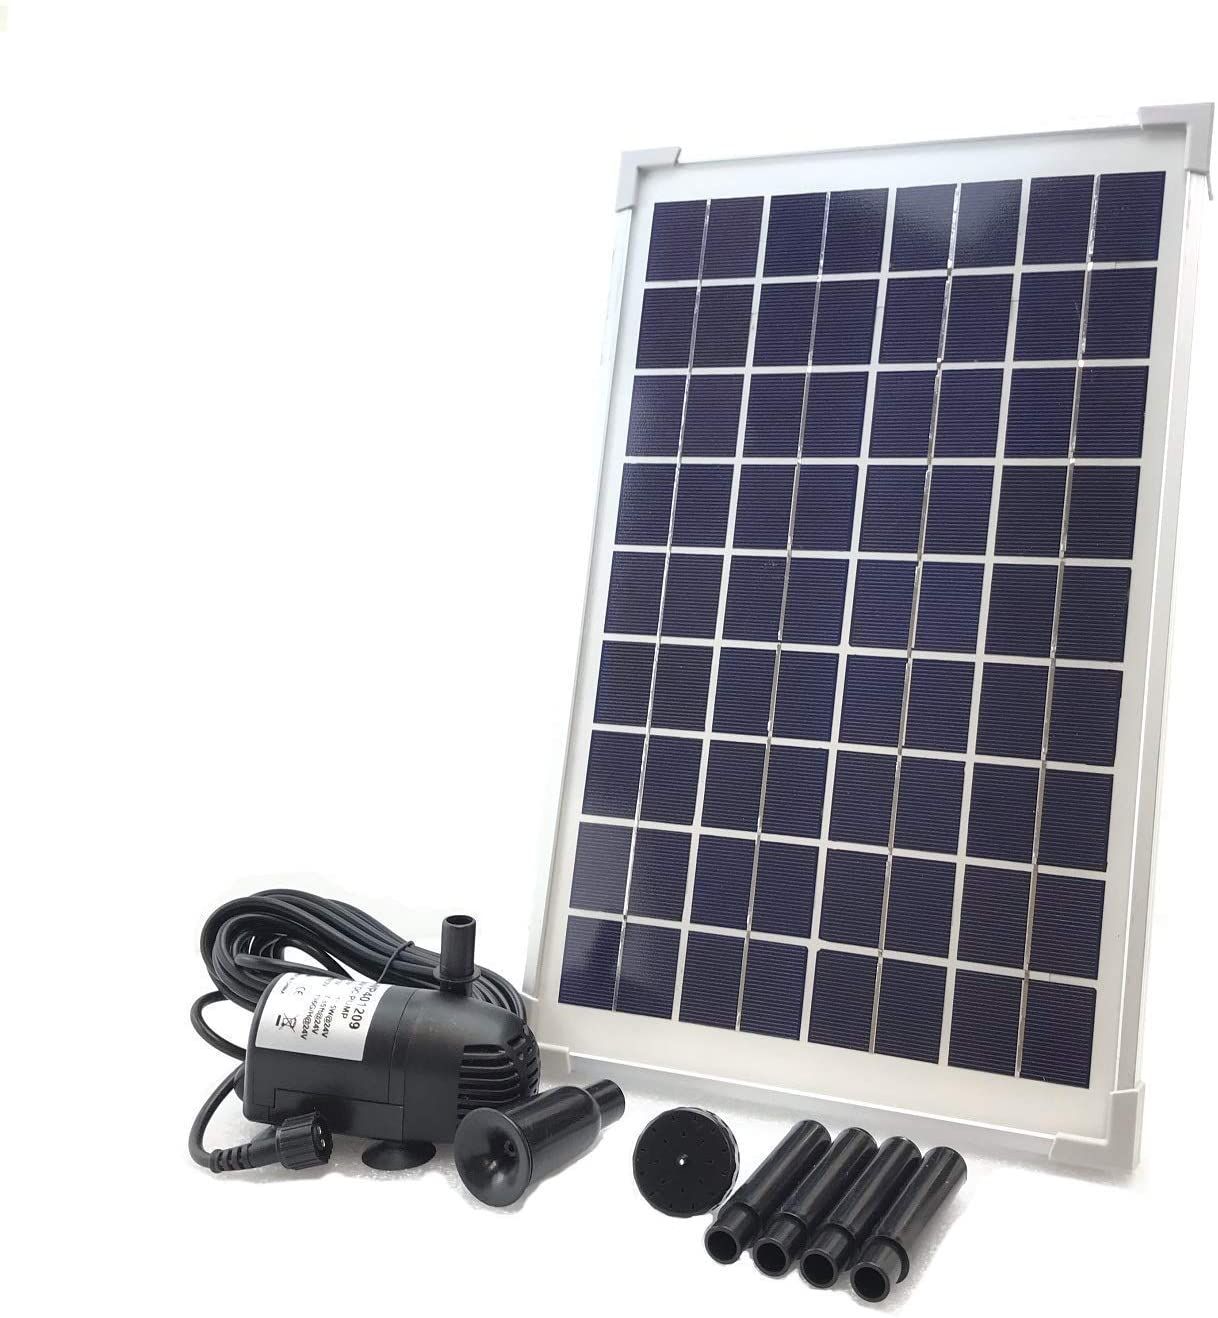 AEO Solar Water Pump Kit - $$title$$